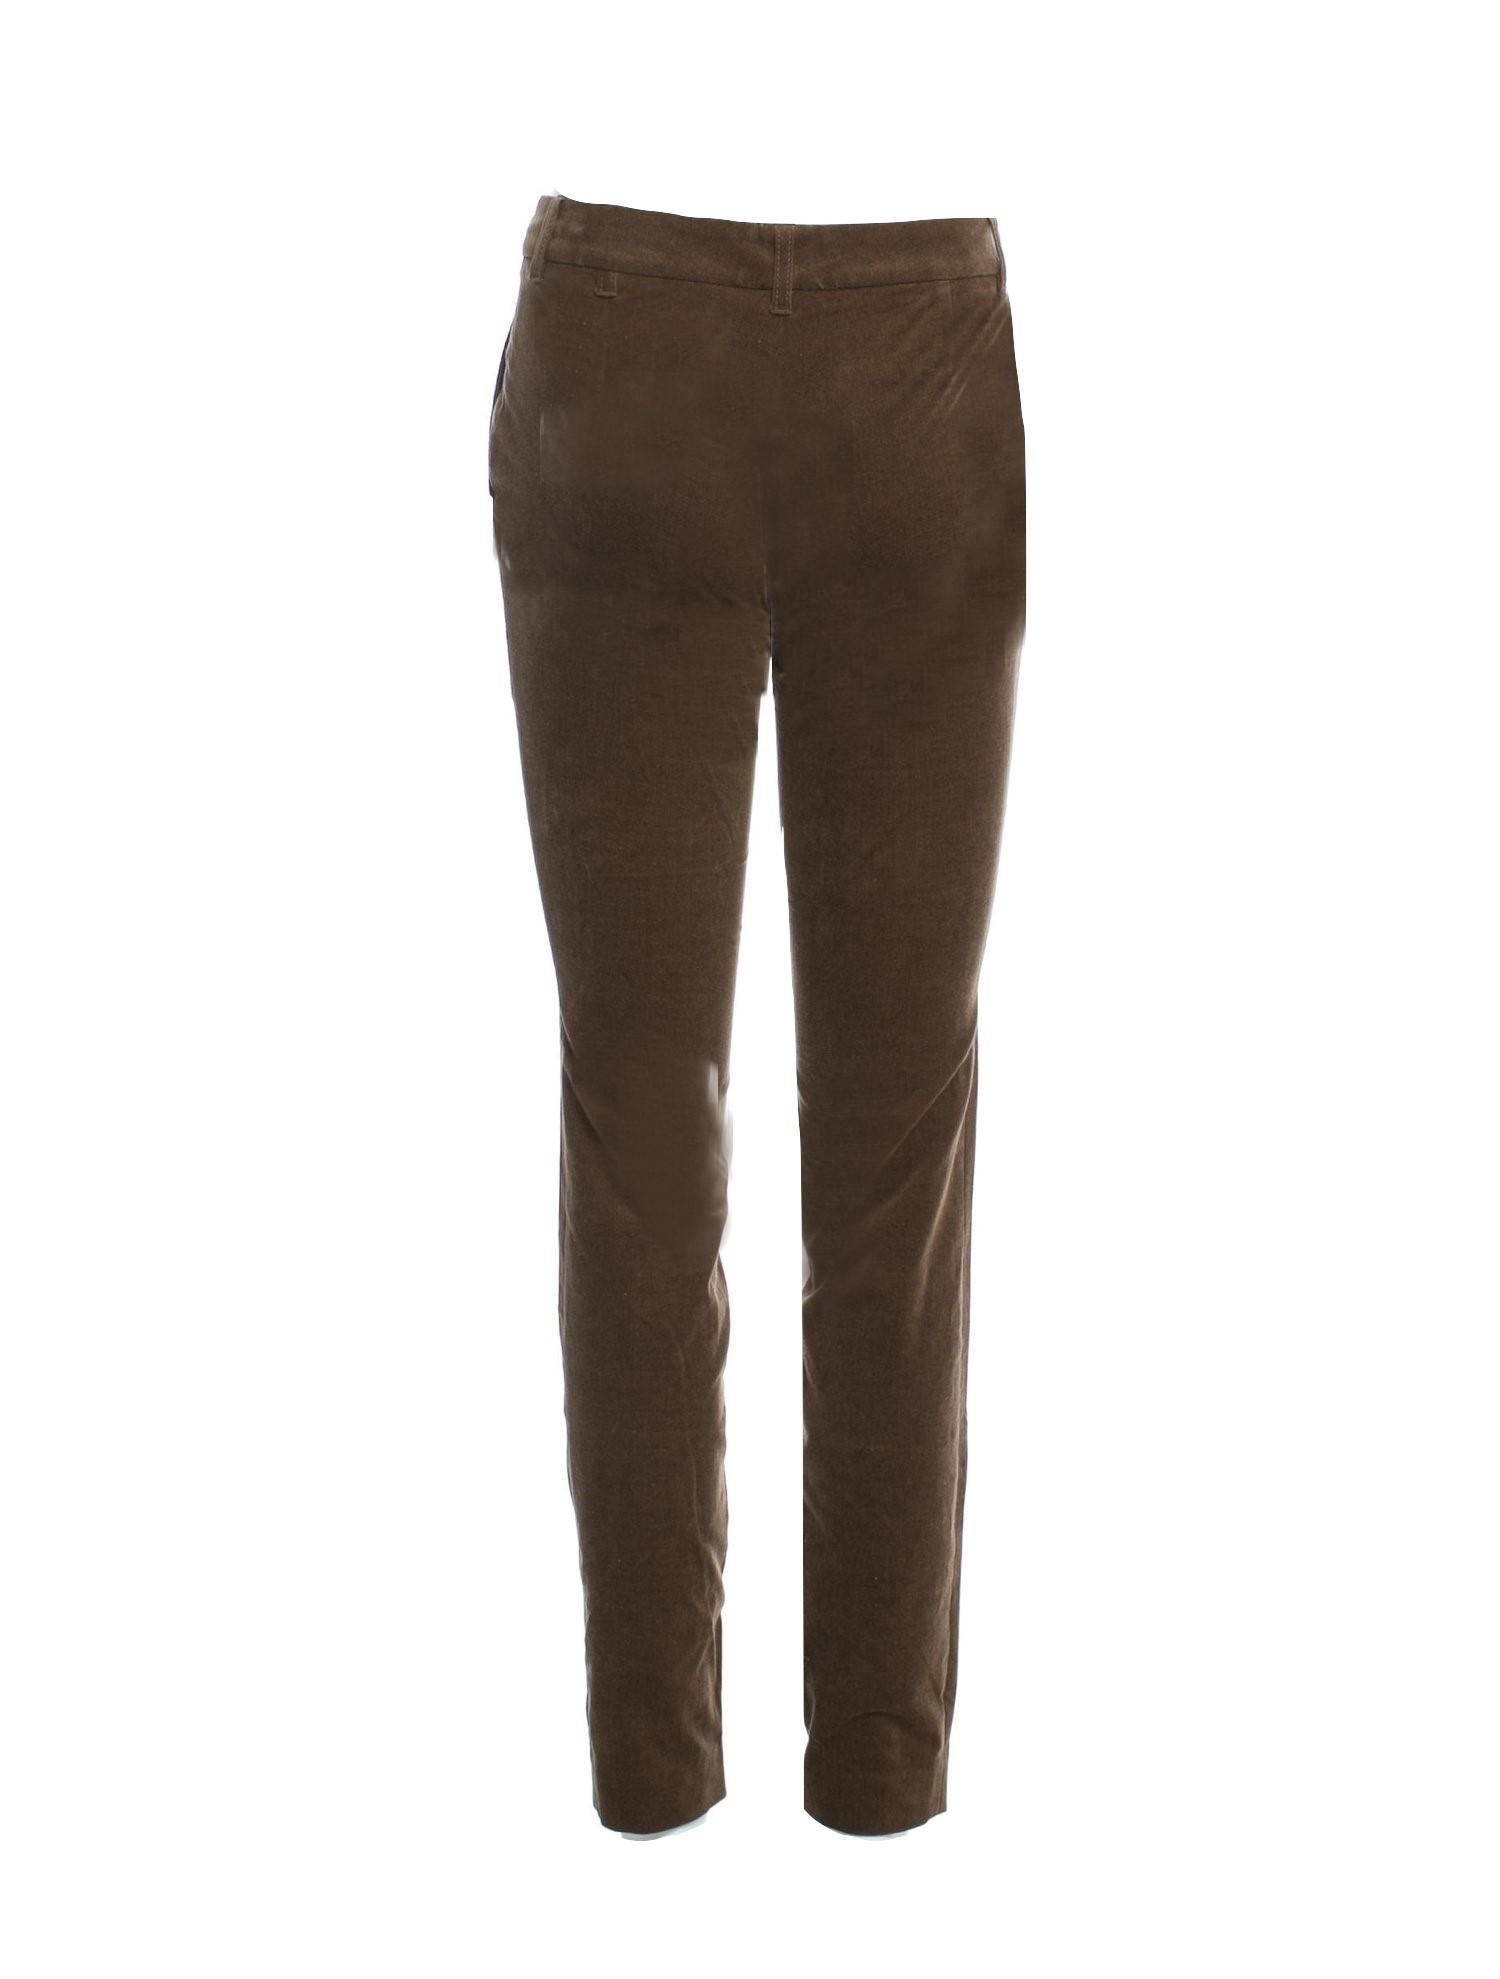 Women's New Gucci Olive Brown Velvet Runway Pants Pre-Fall 2011 Sz 38 $1499